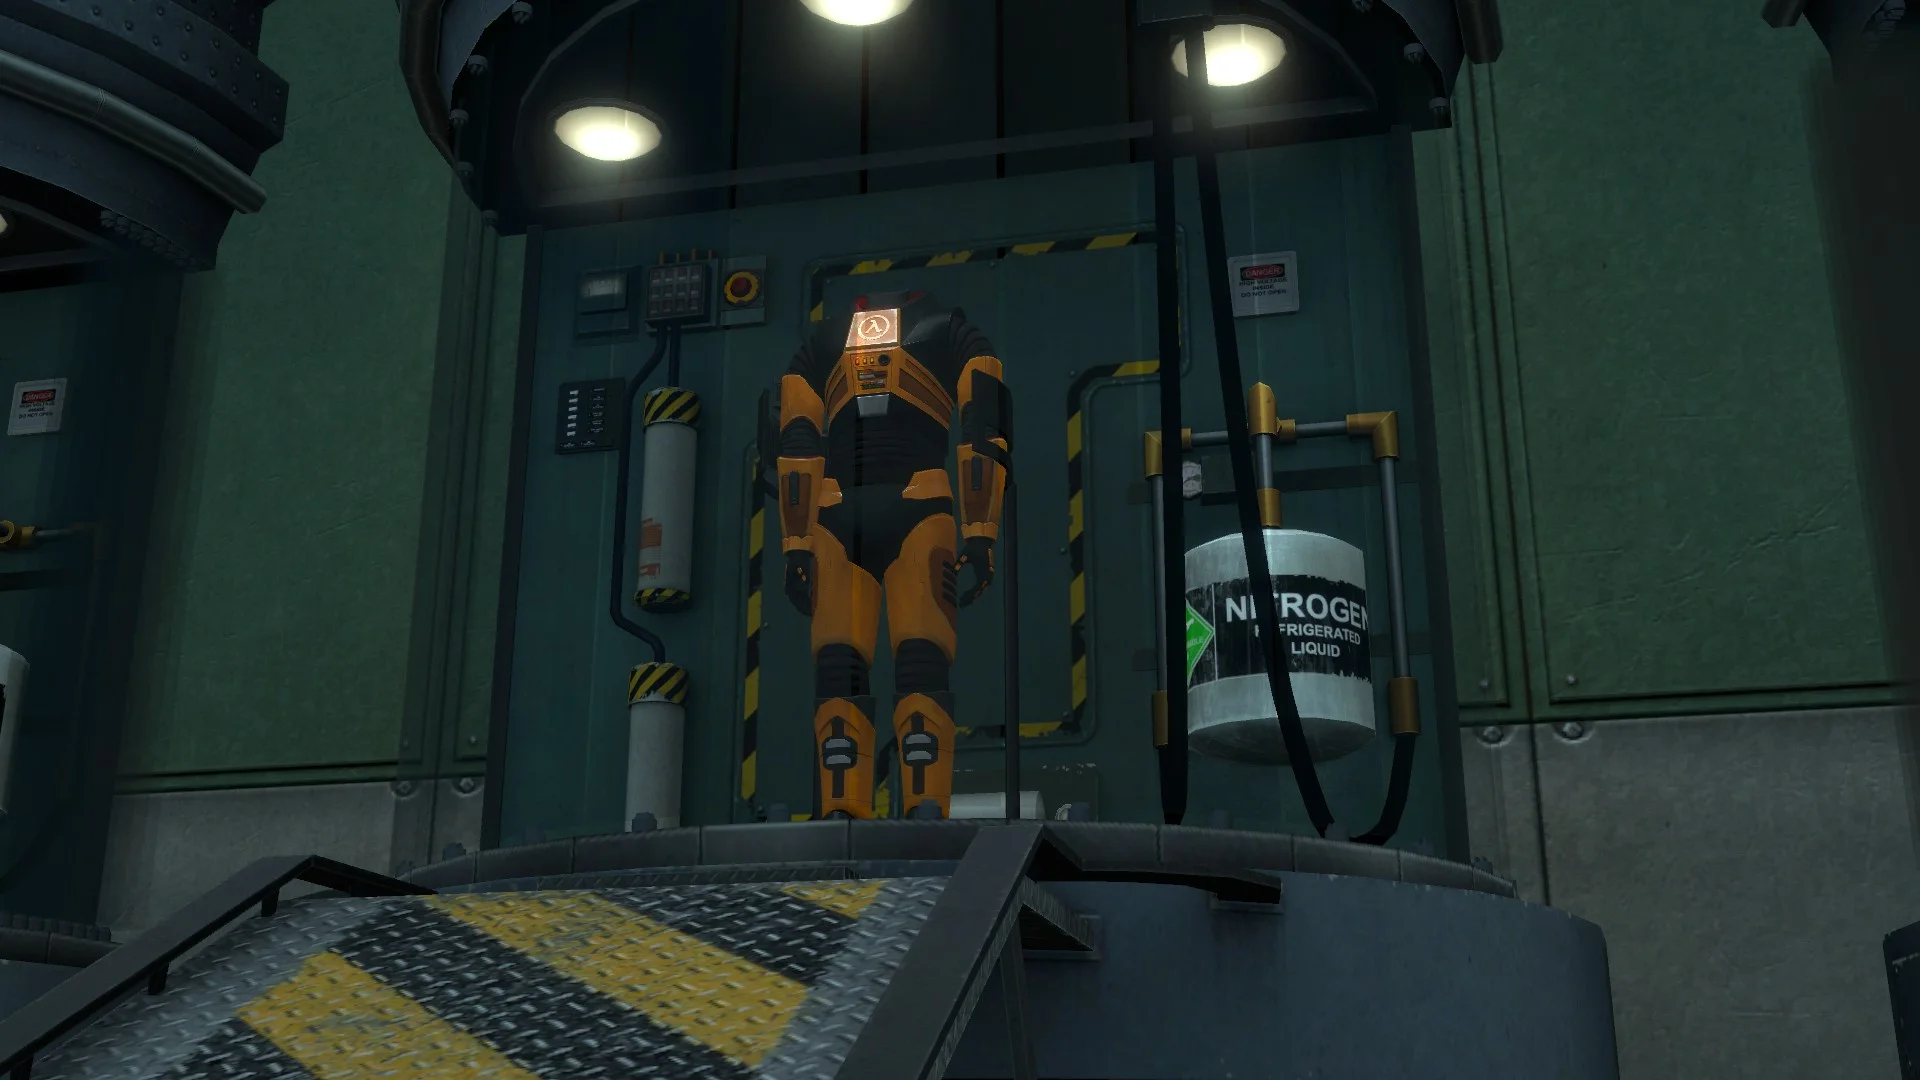 Half-Life Black Mesa received a global update